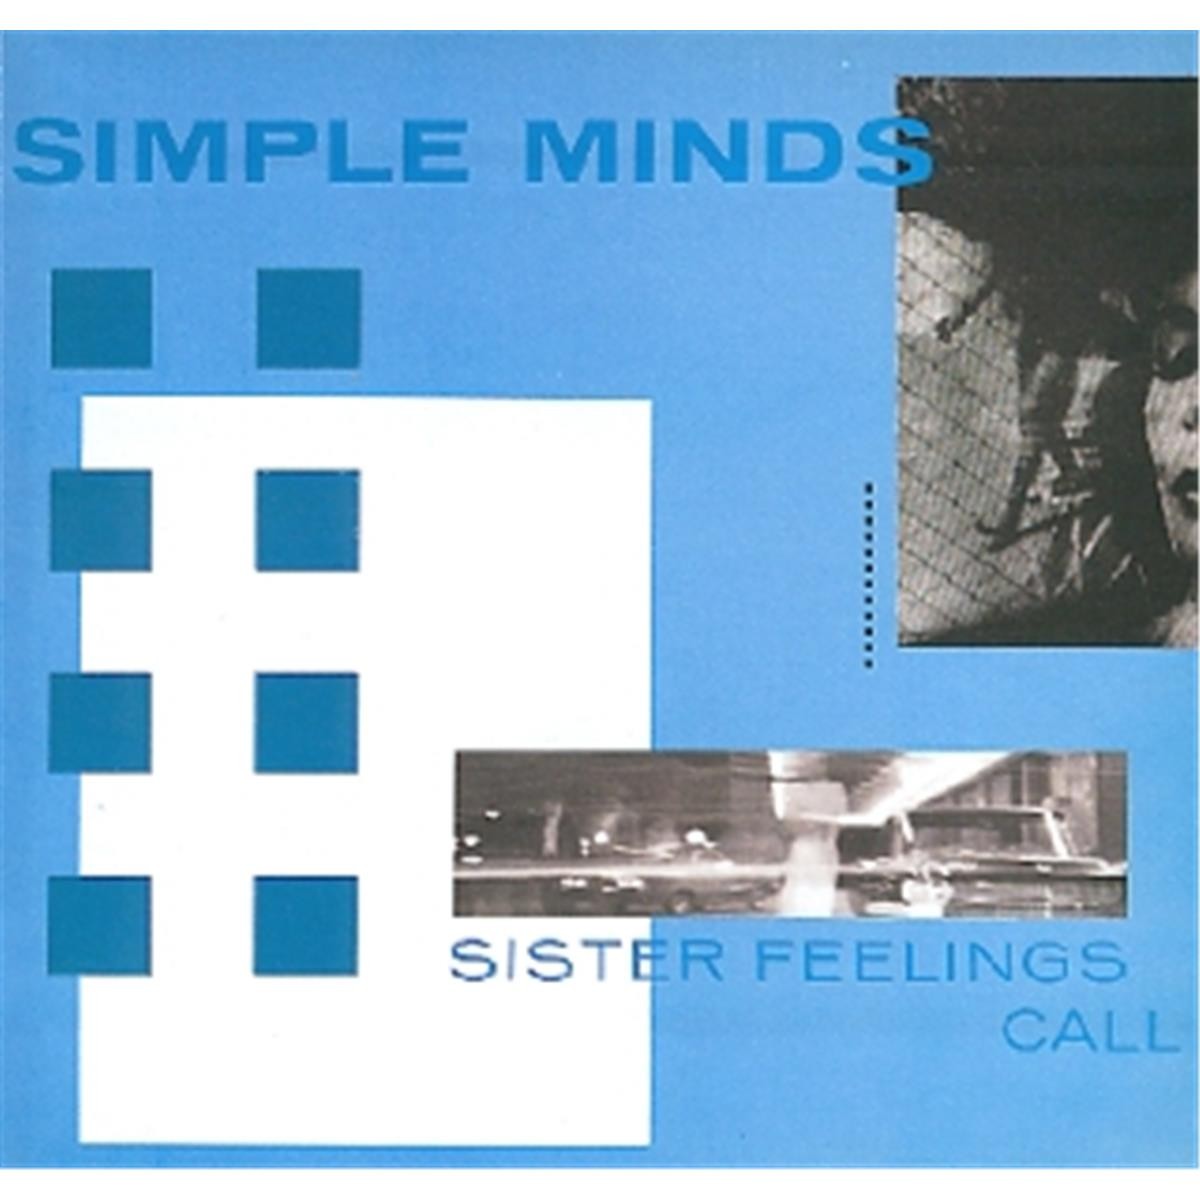 SIMPLE MINDS - SISTER FEELINGS CALL  (LP)